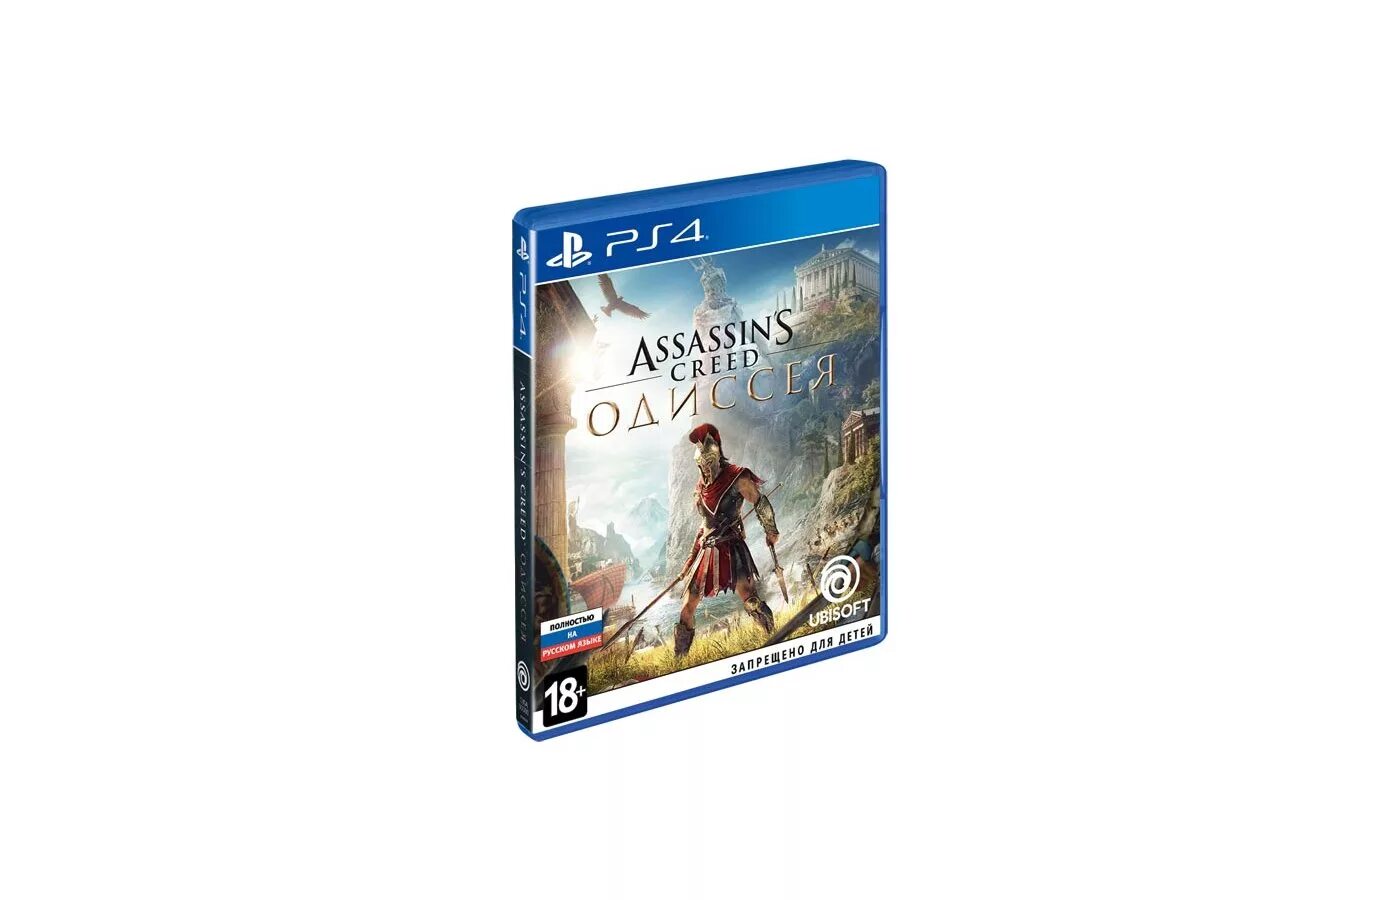 Assassins игра ps4. Ассасин Крид Одиссея диск ПС 4. Диск на ПС 4 ассасин Крид Odyssey. Assassin's Creed Одиссея ps4. Ps4 диск Assassins Creed.